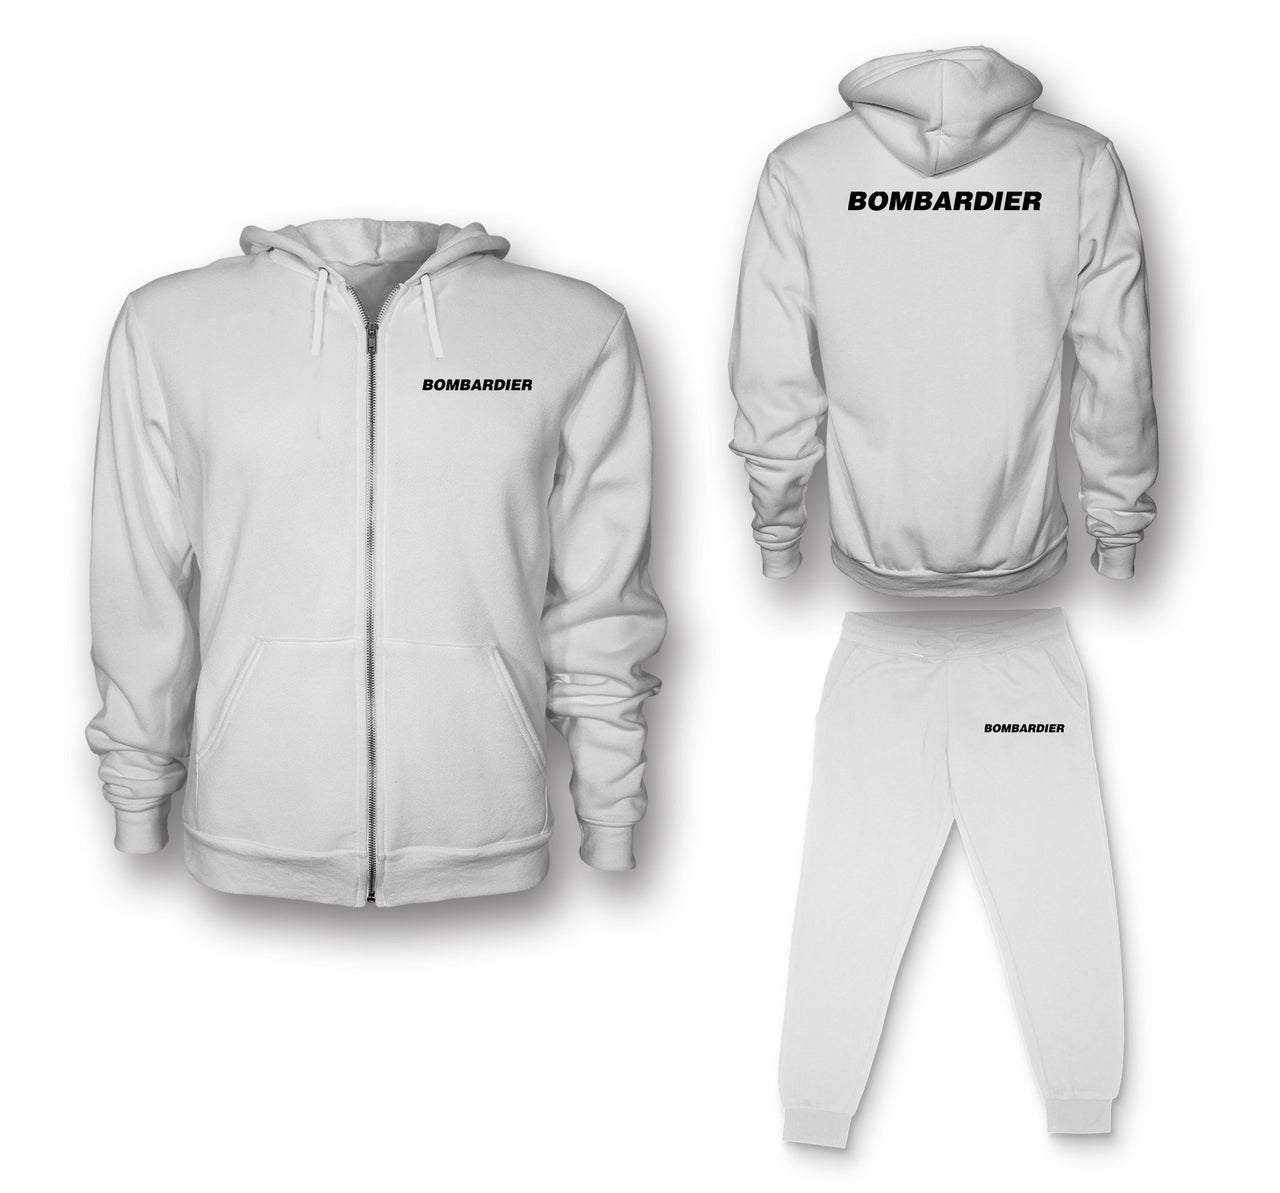 Bombardier & Text Designed Zipped Hoodies & Sweatpants Set